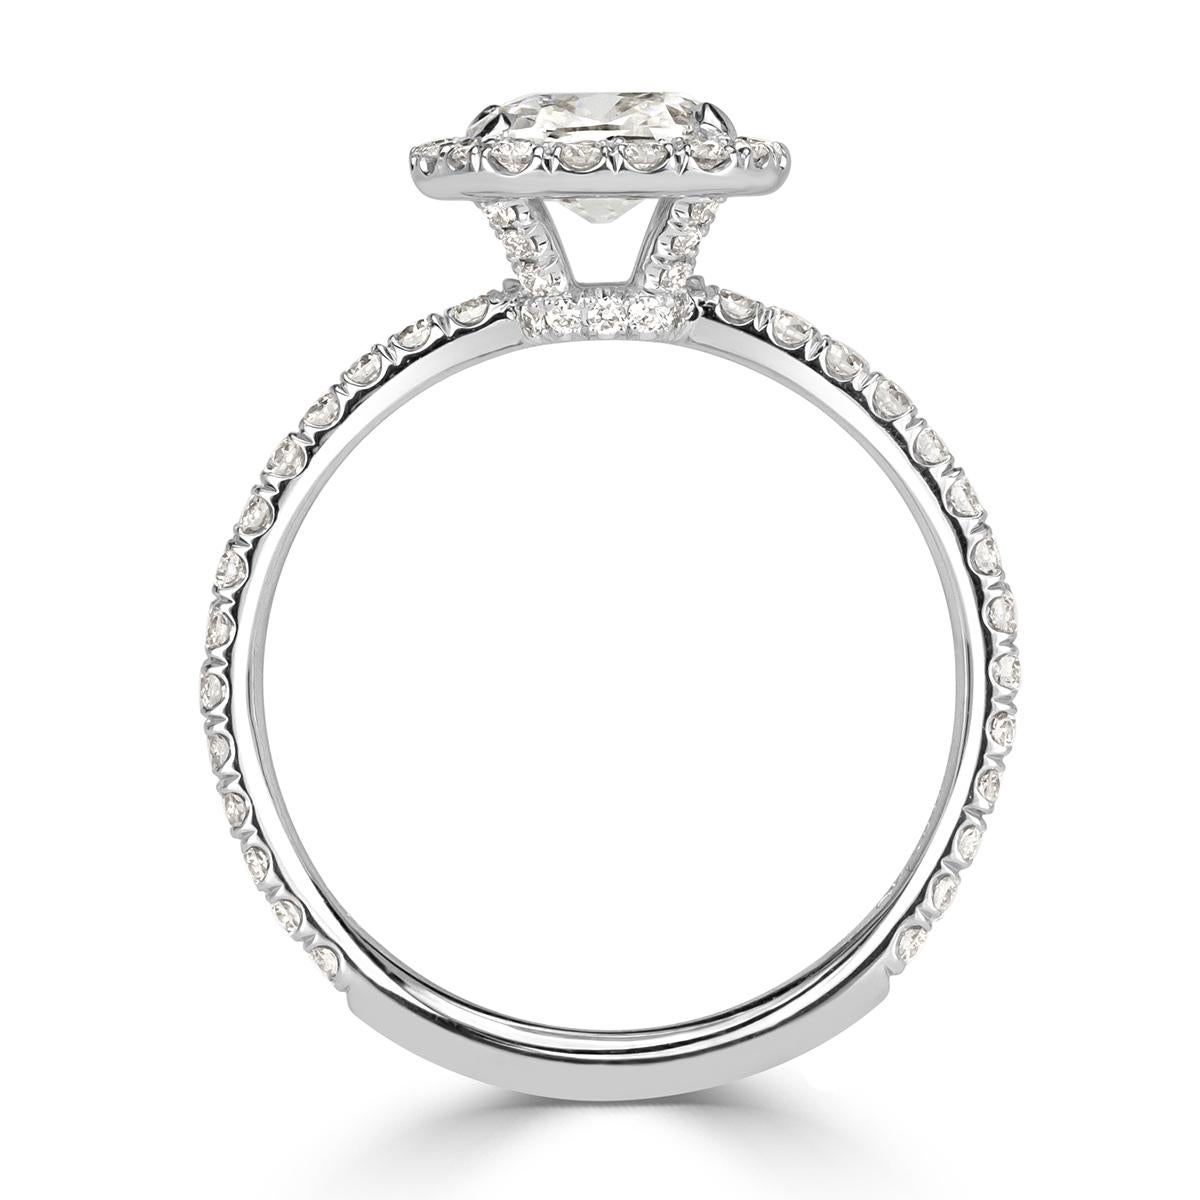 1.67 carat diamond ring